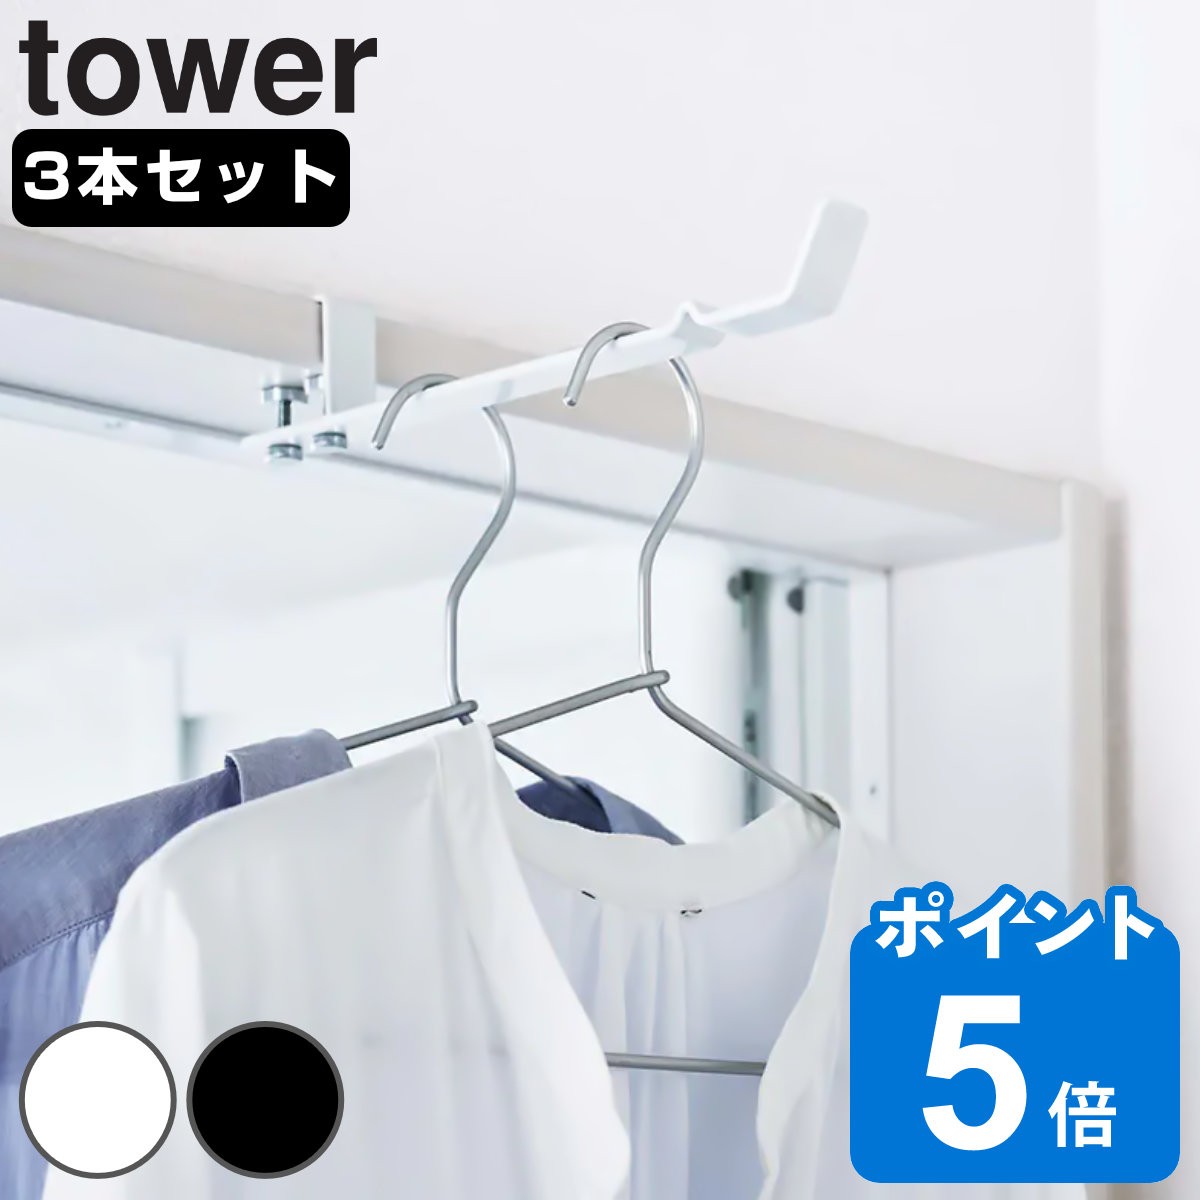 h[nK[ ^[ tower 3{Zbg nK[